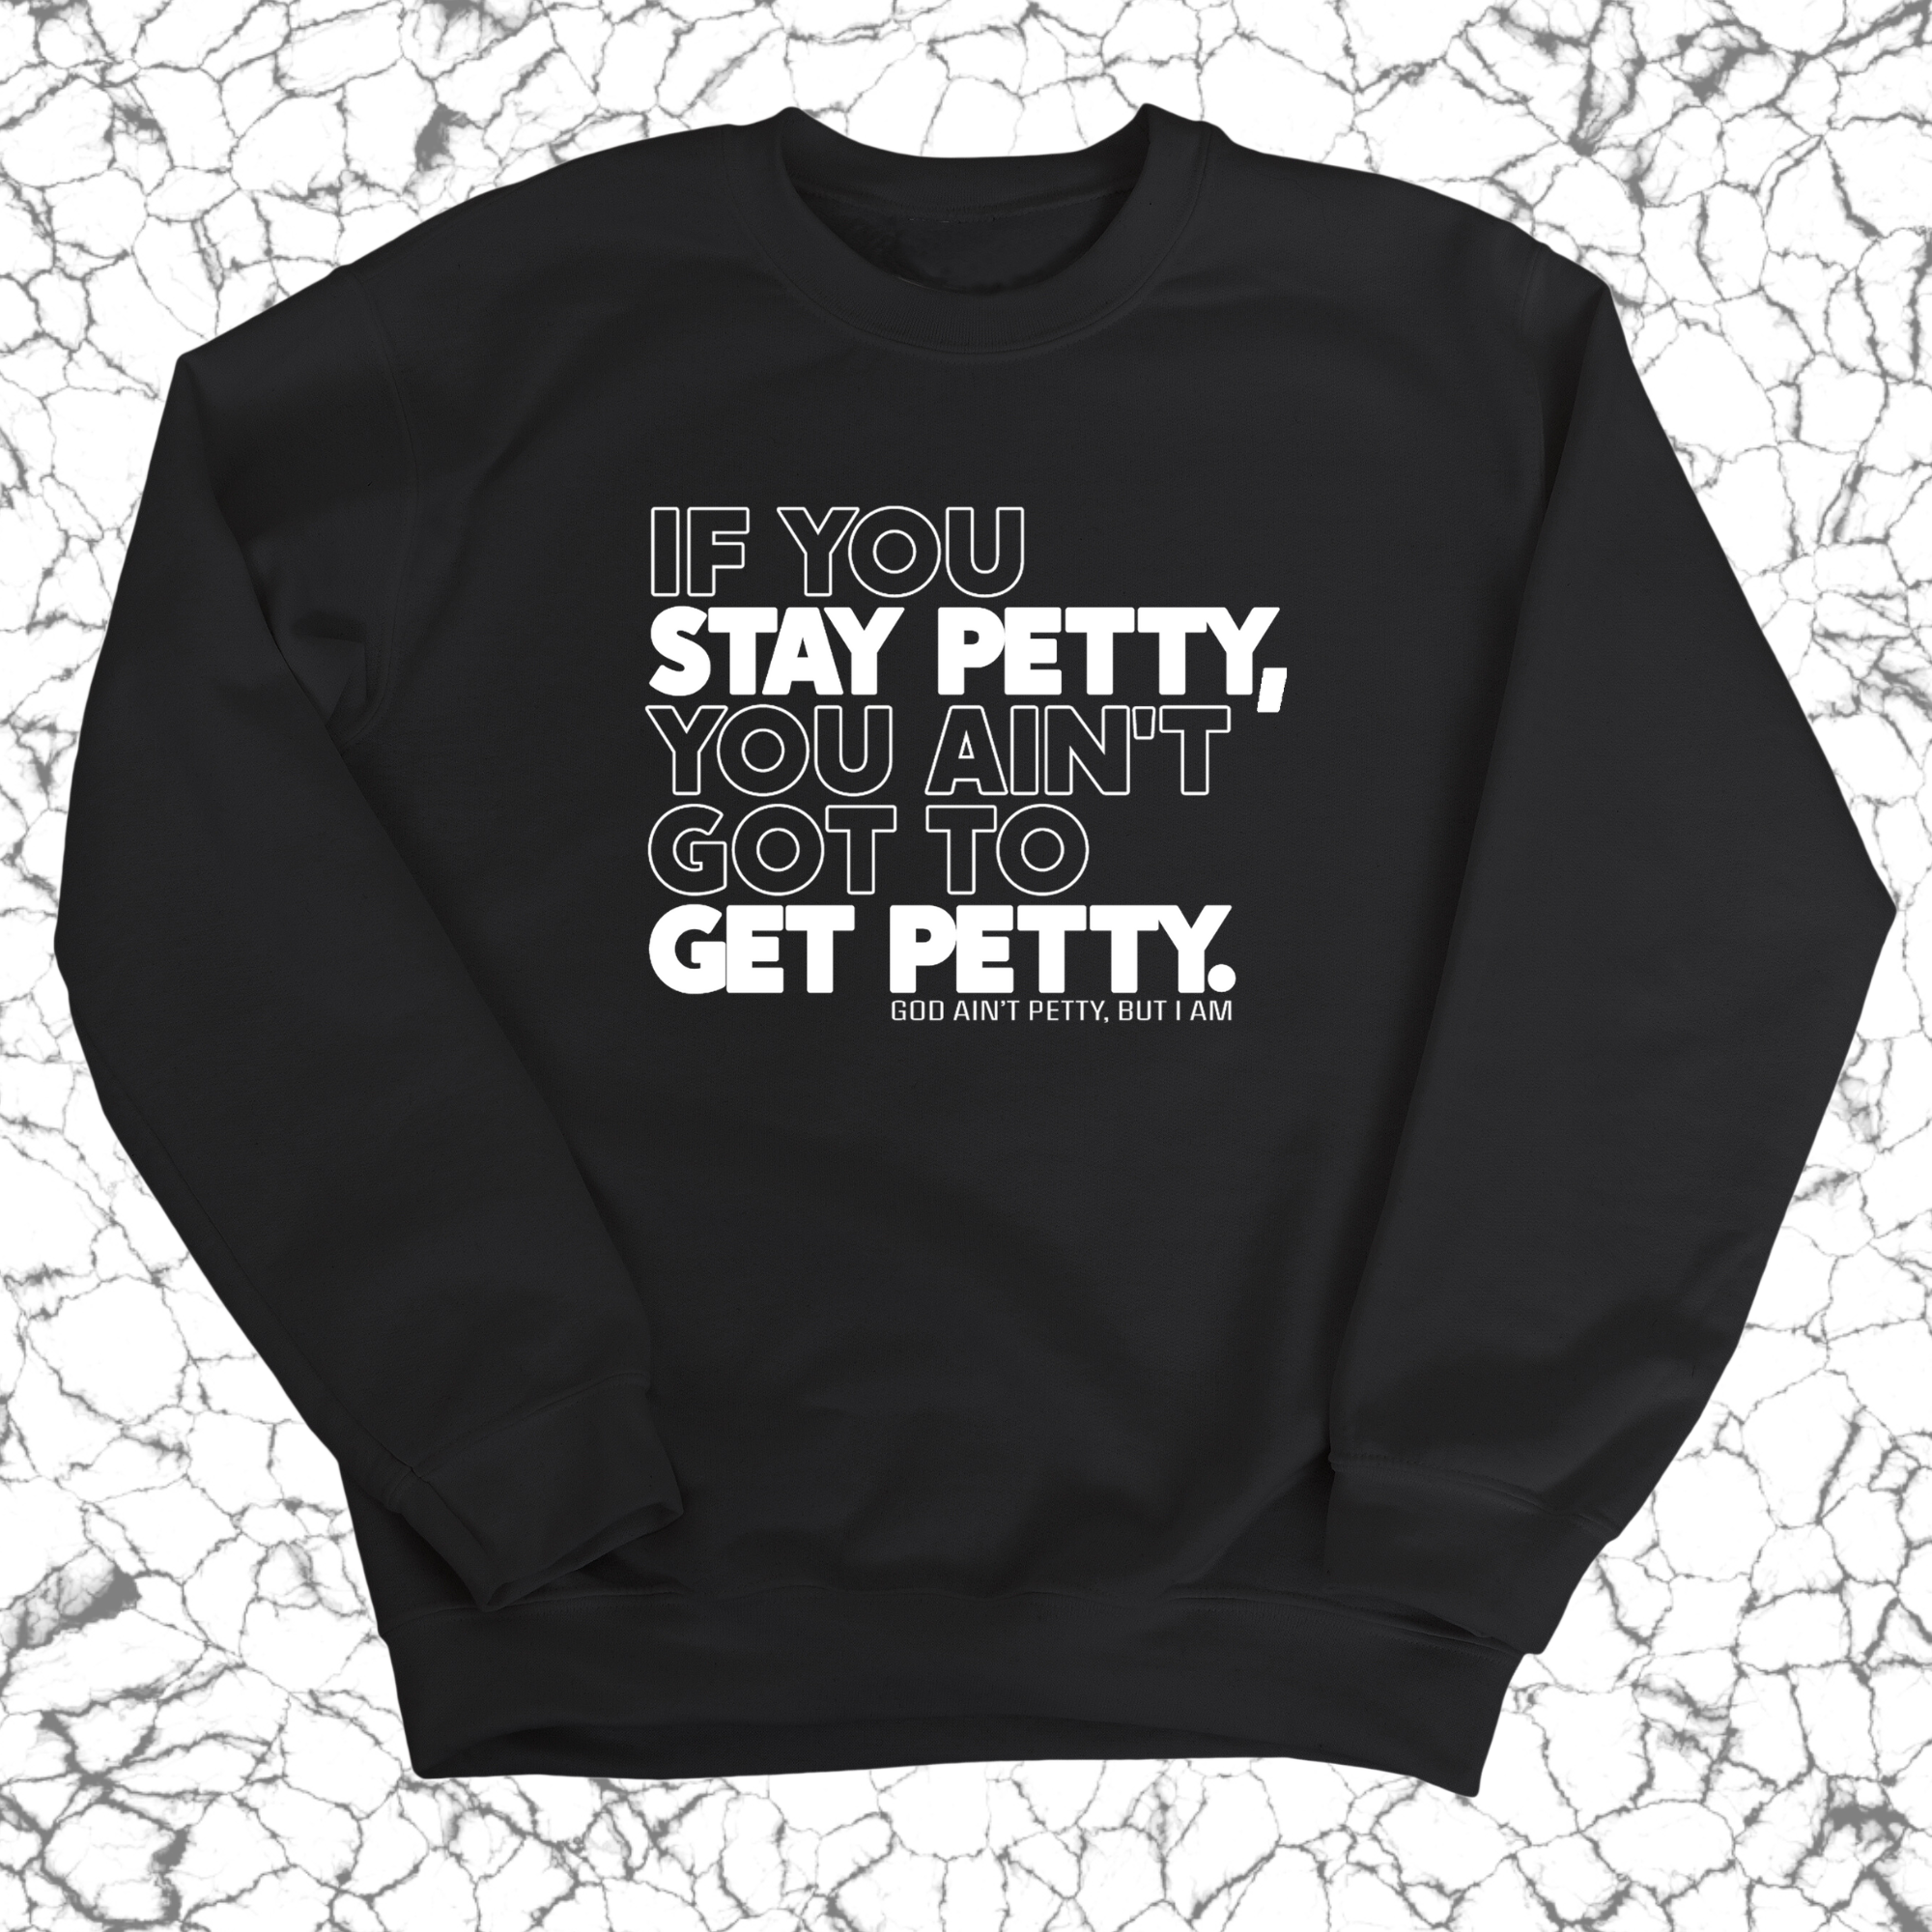 If You Stay Petty, You Ain't Got to Get Petty Unisex Sweatshirt-Sweatshirt-The Original God Ain't Petty But I Am